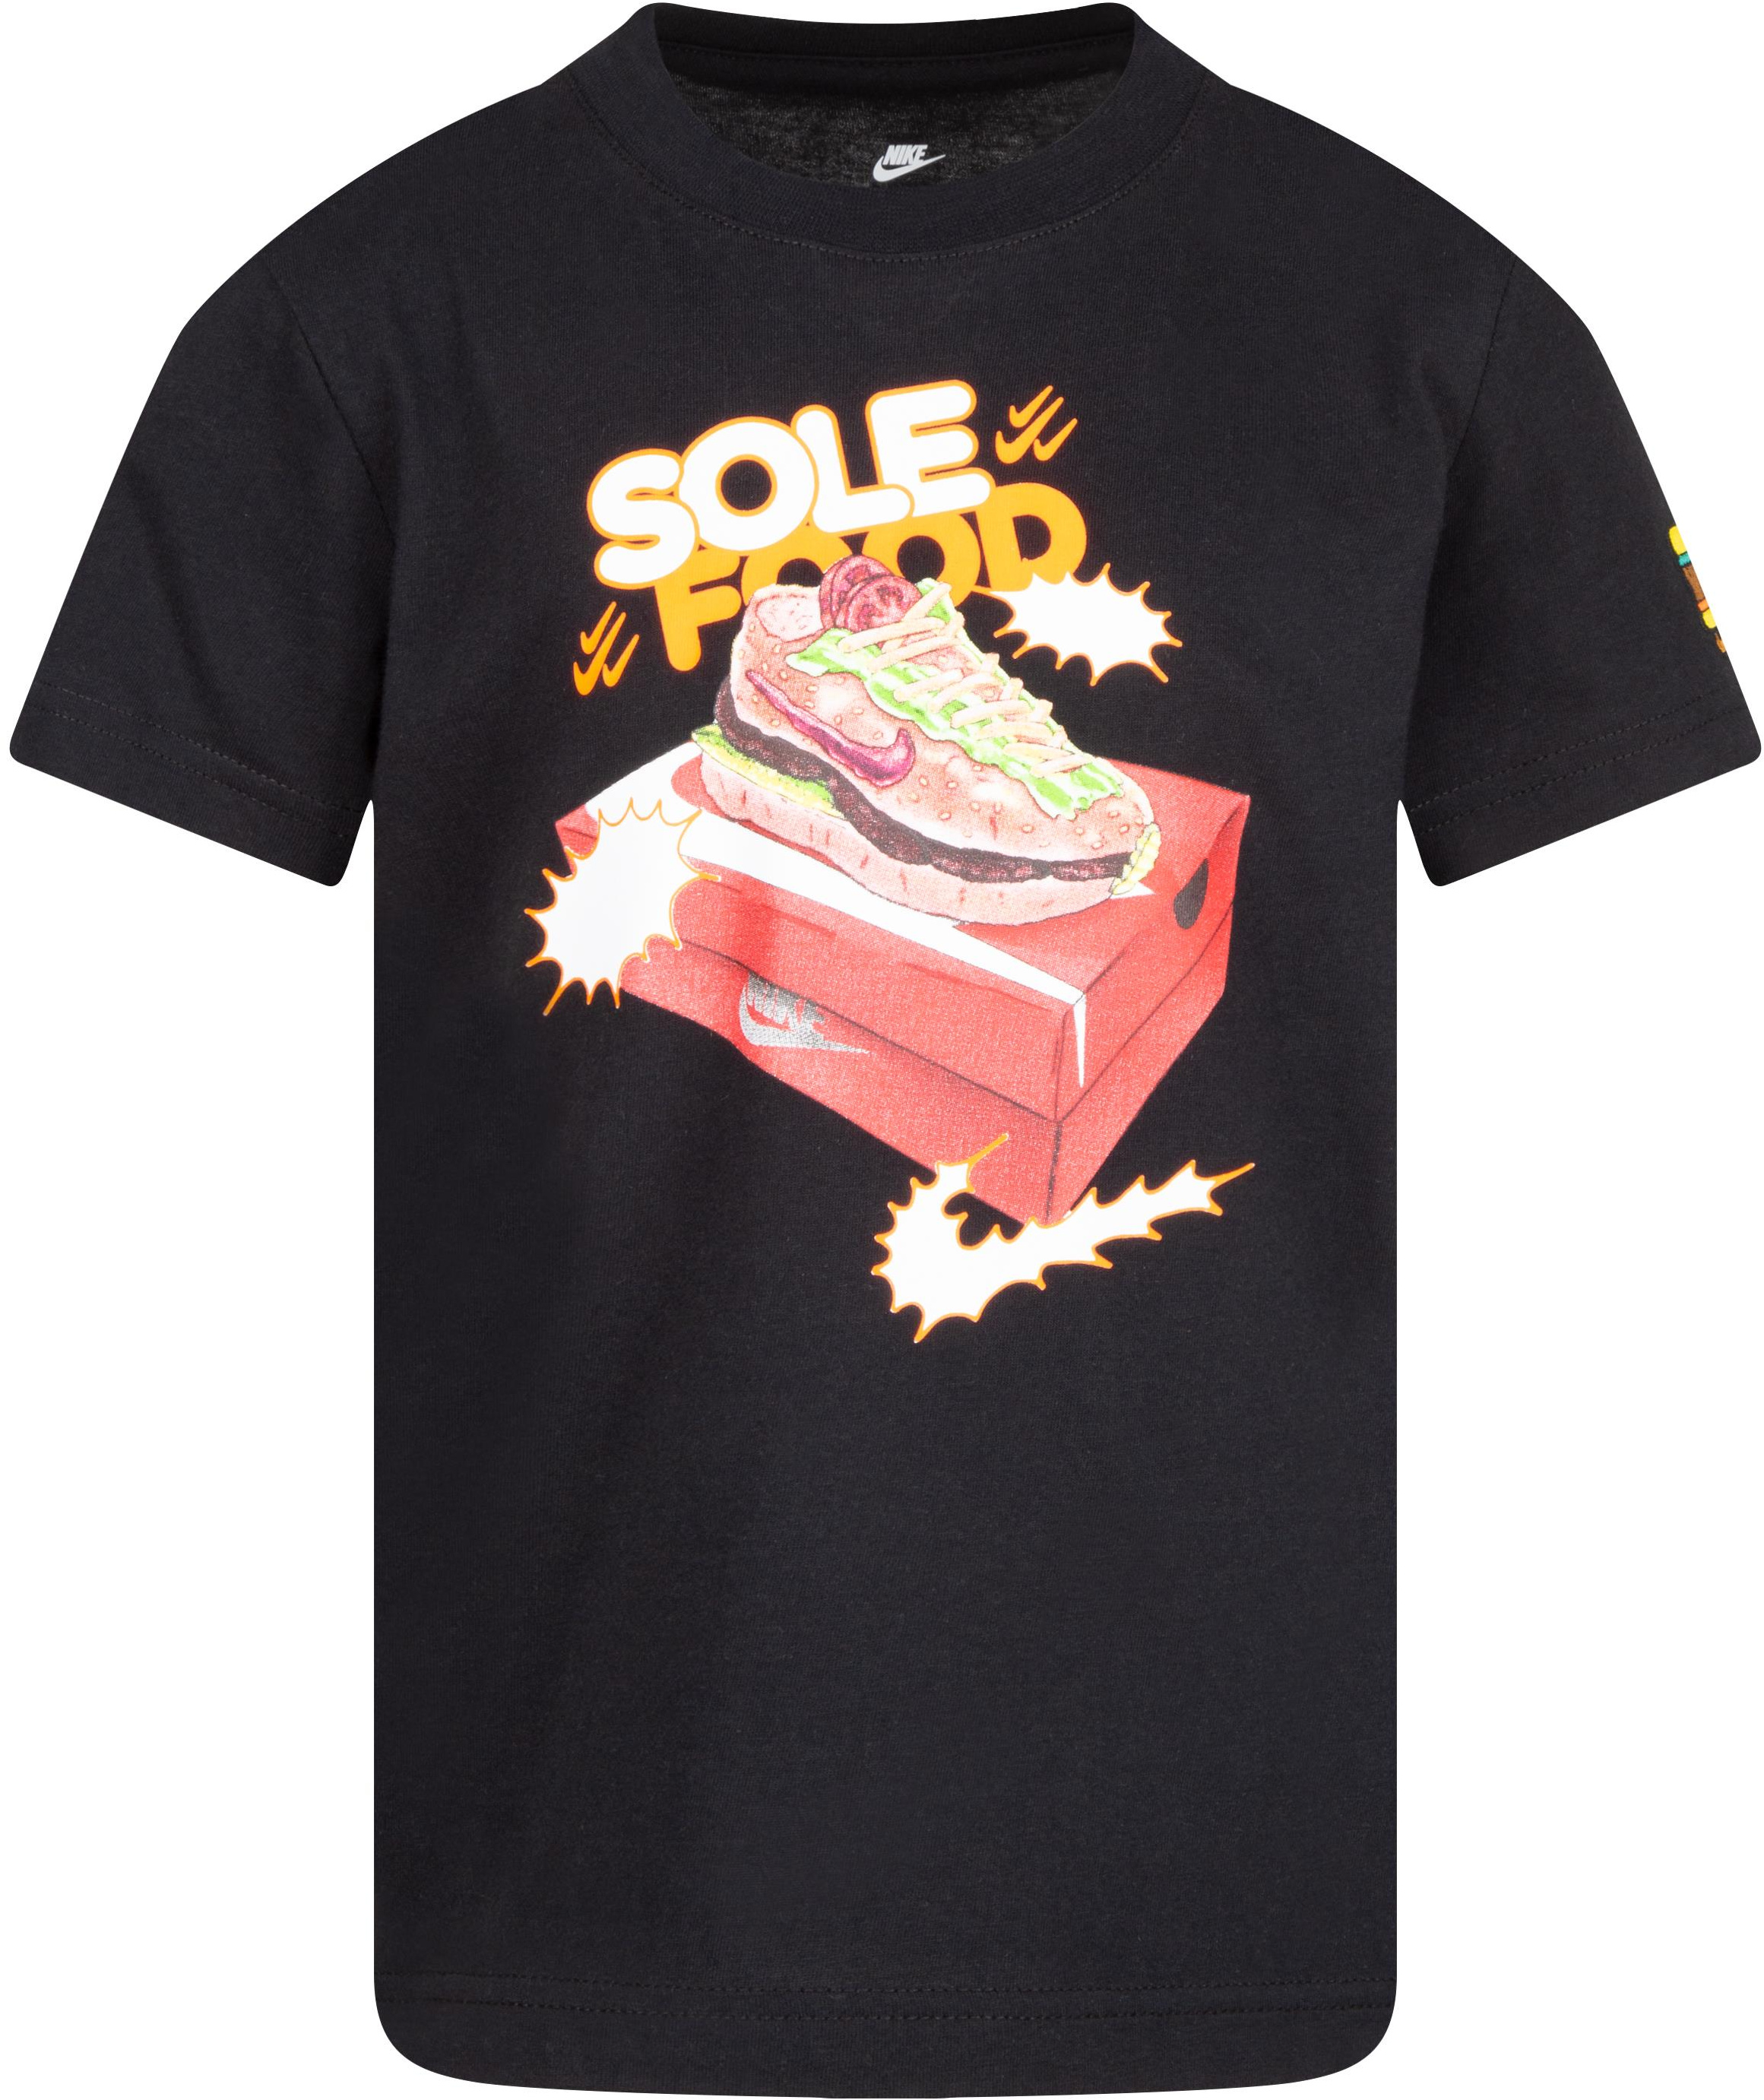 Nike T-Shirt Kids Sleeve Sole Food Kids) Kids/Big Short (Toddler/Little